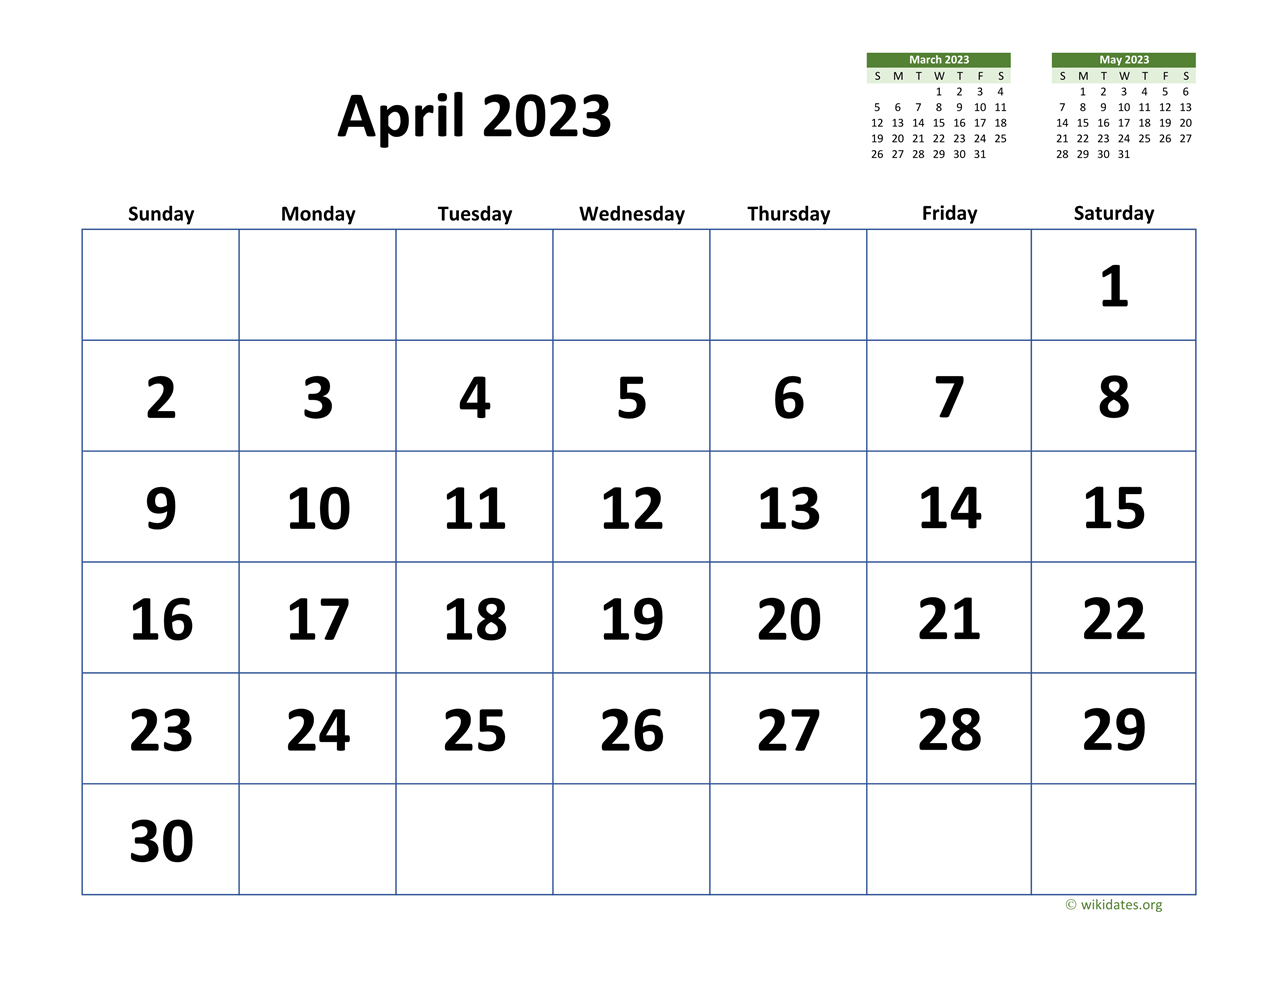 April 2023 Calendar with Extralarge Dates